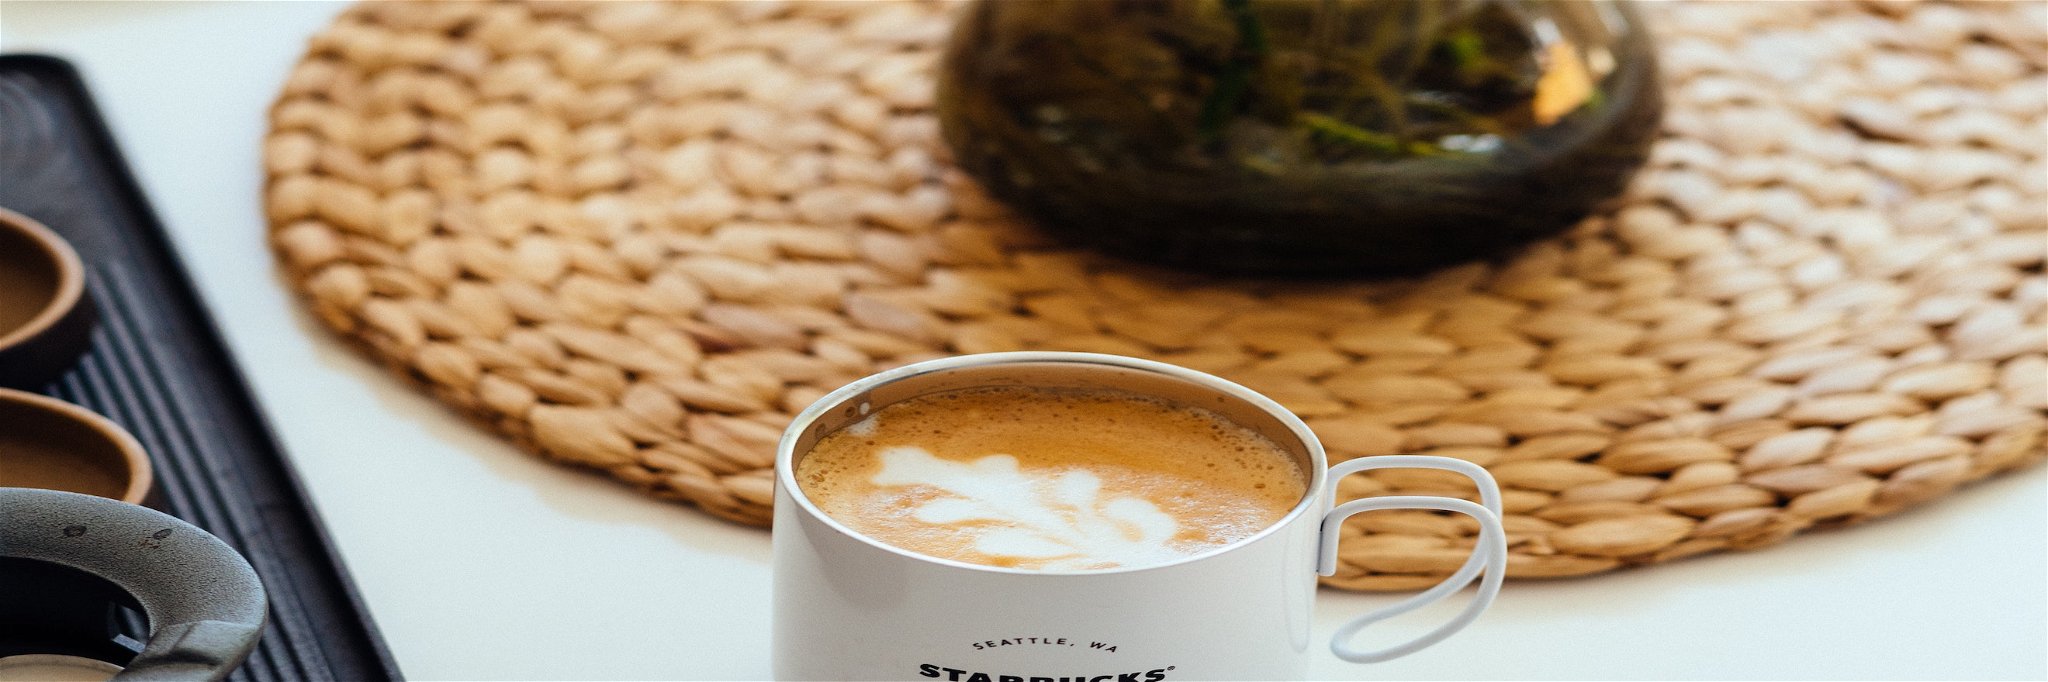 Nestlé and Starbucks Extend Coffee Partnership to New Markets